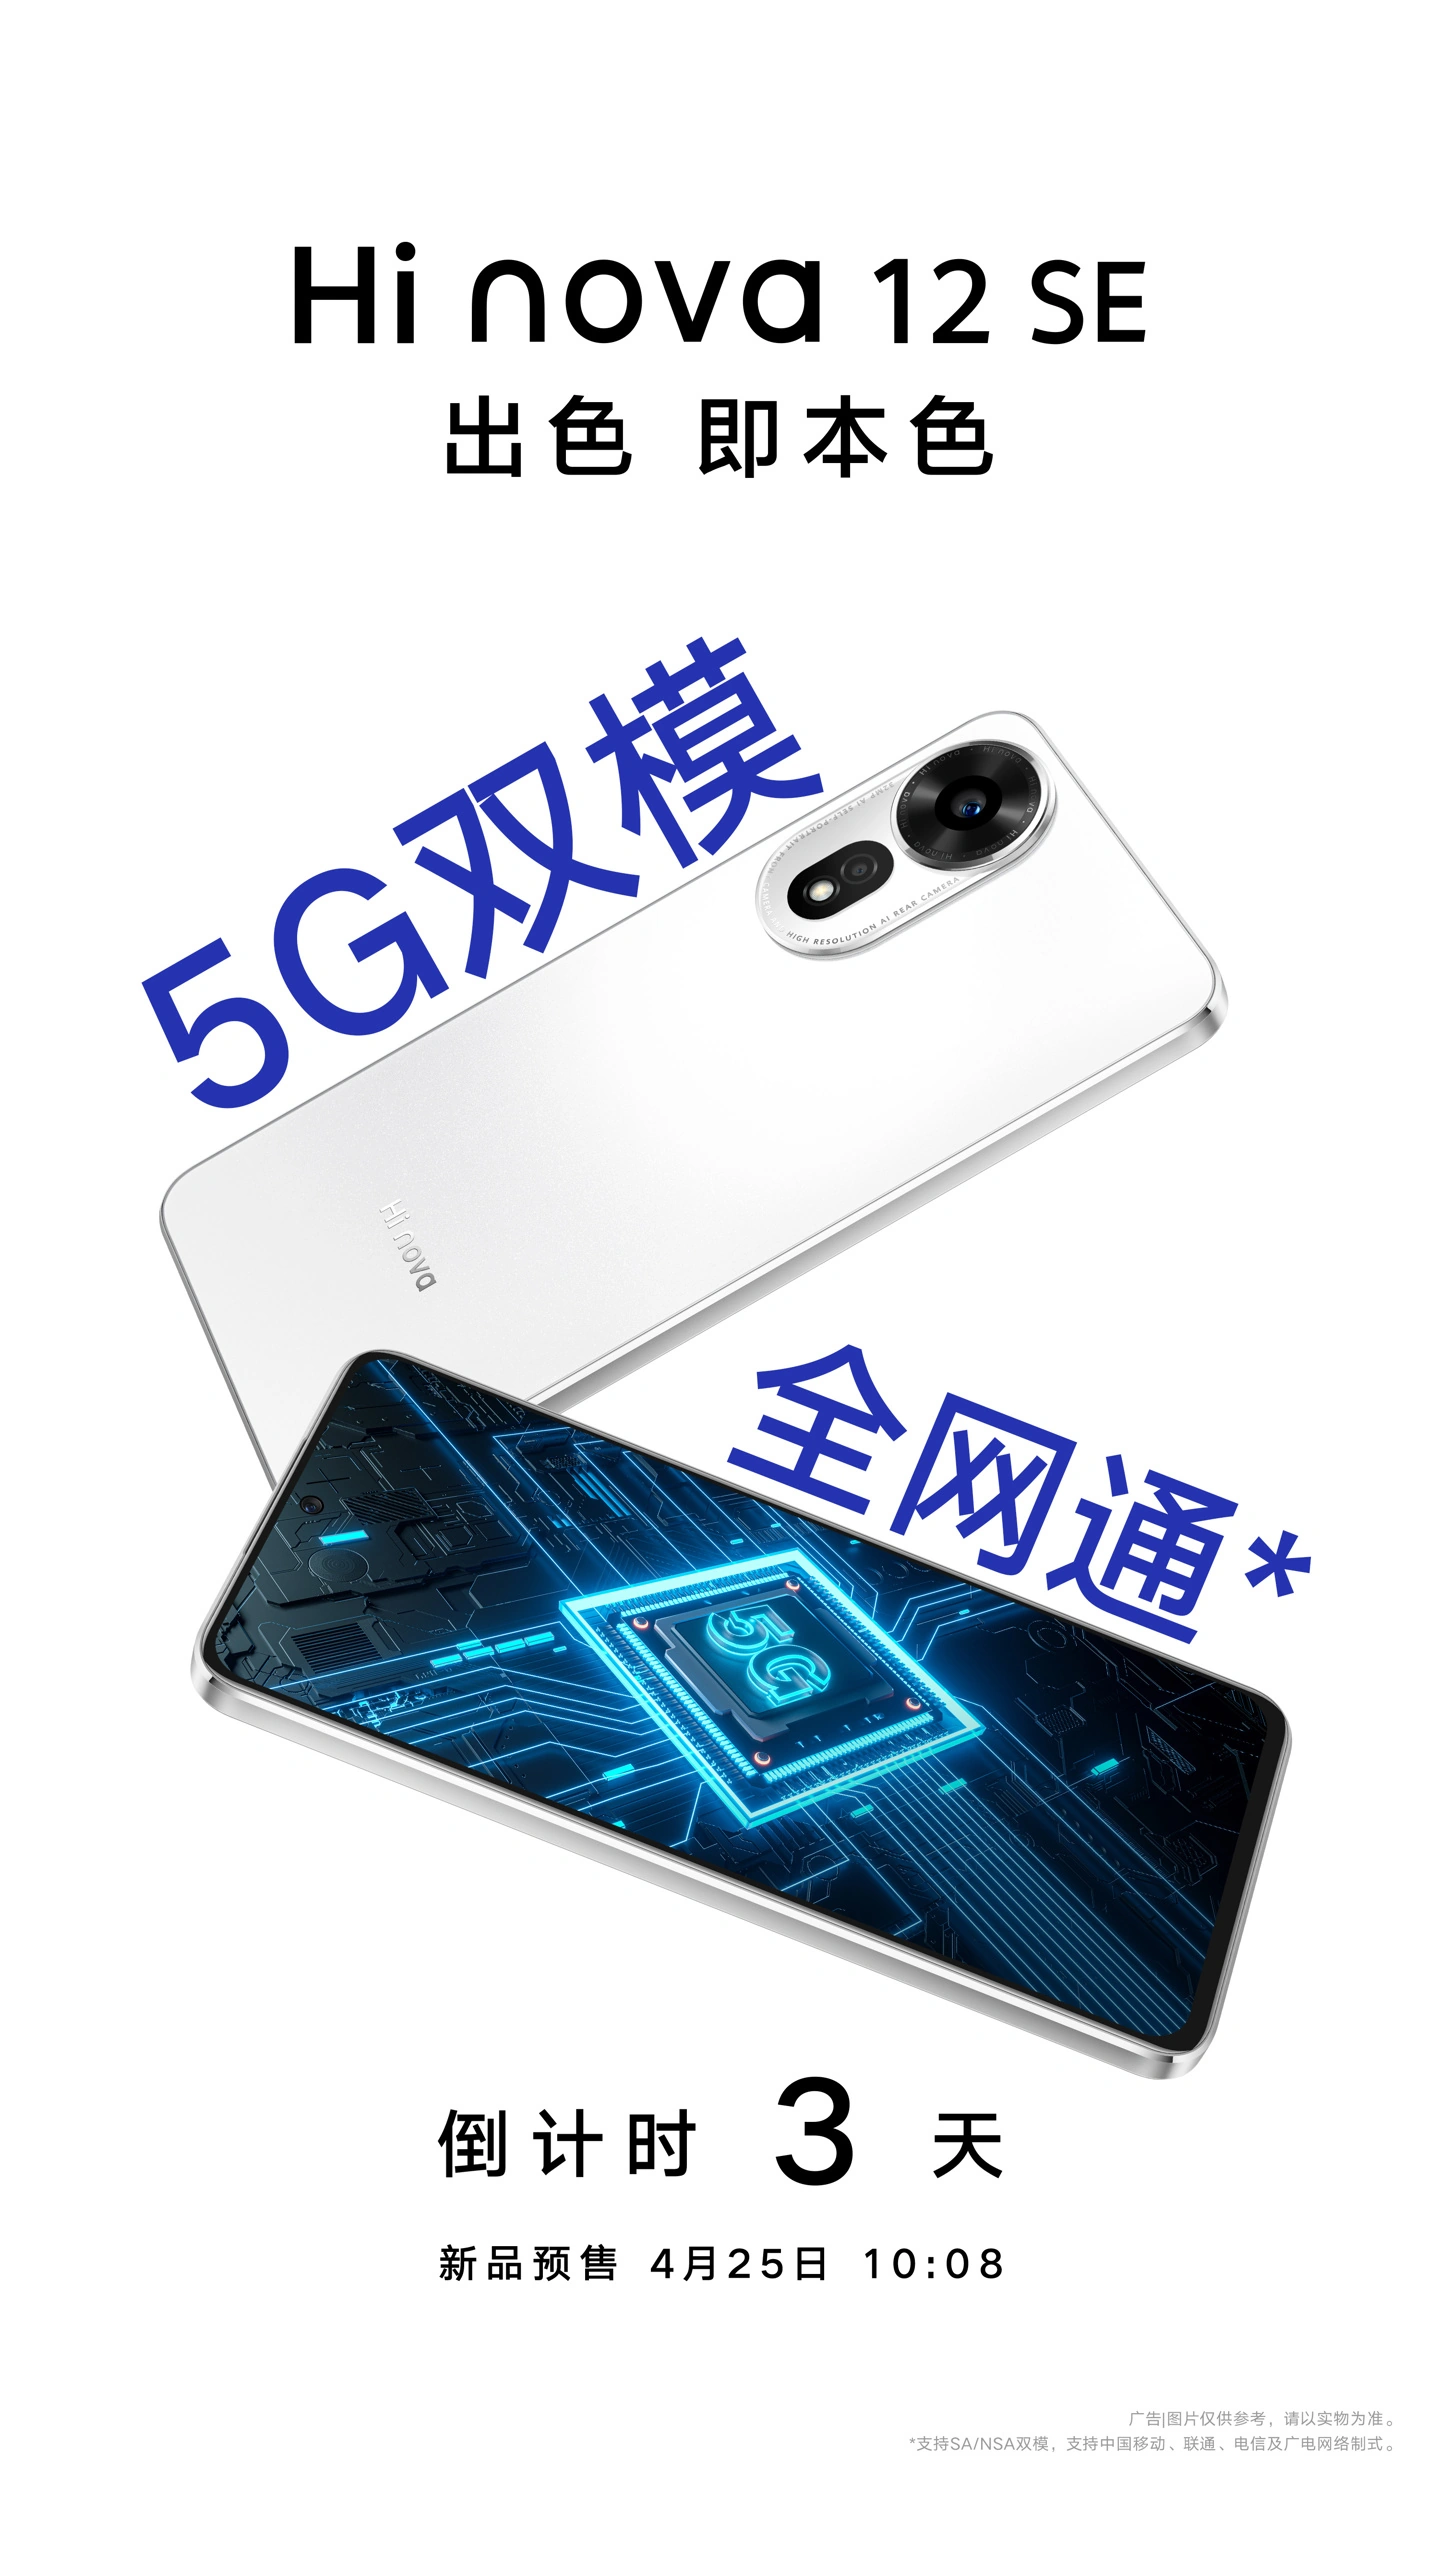 Доступный 5G-смартфон (не) от Huawei! Hi nova 12 SE скоро в продаже